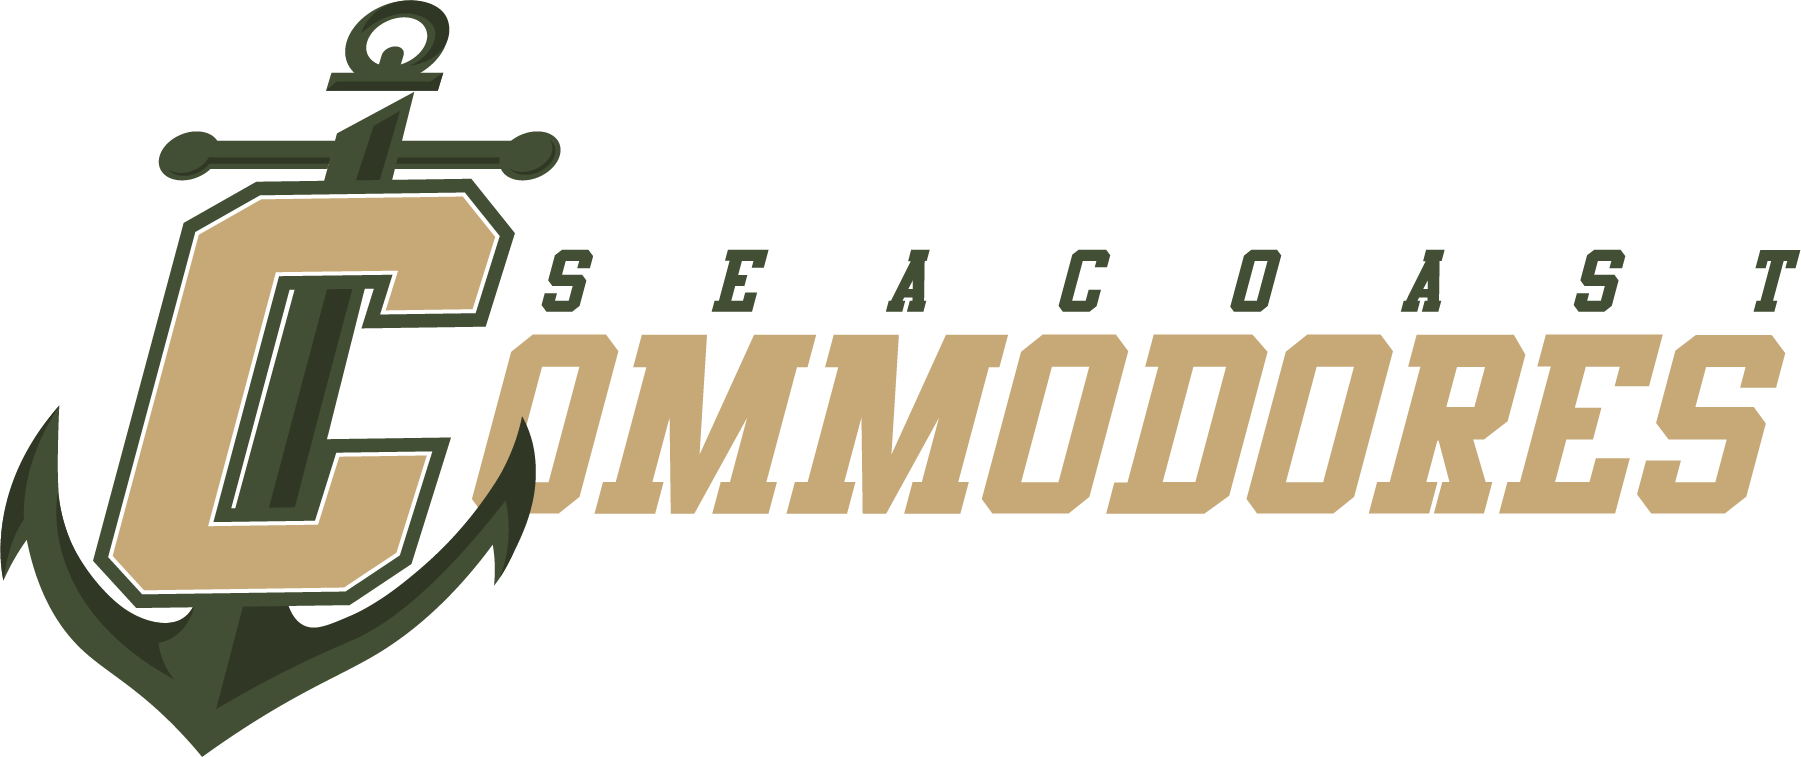 Commodores Logo Full@4x